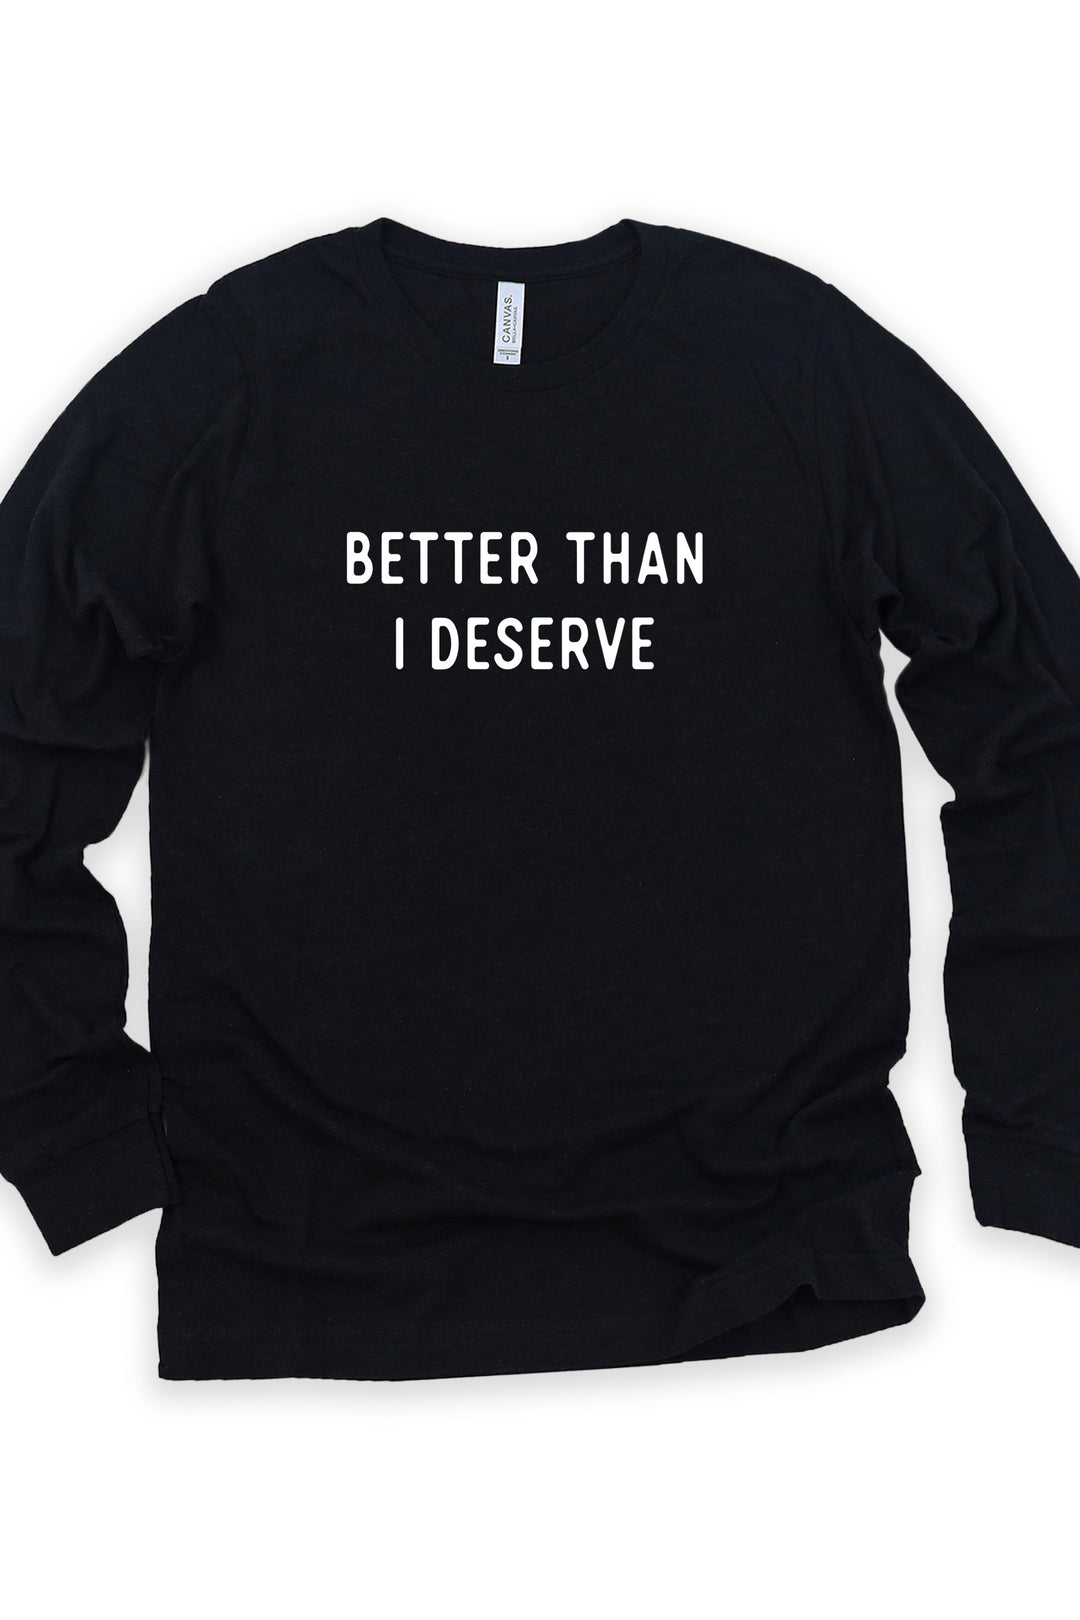 "Better Than I Deserve" Minimal Long Sleeve Tee